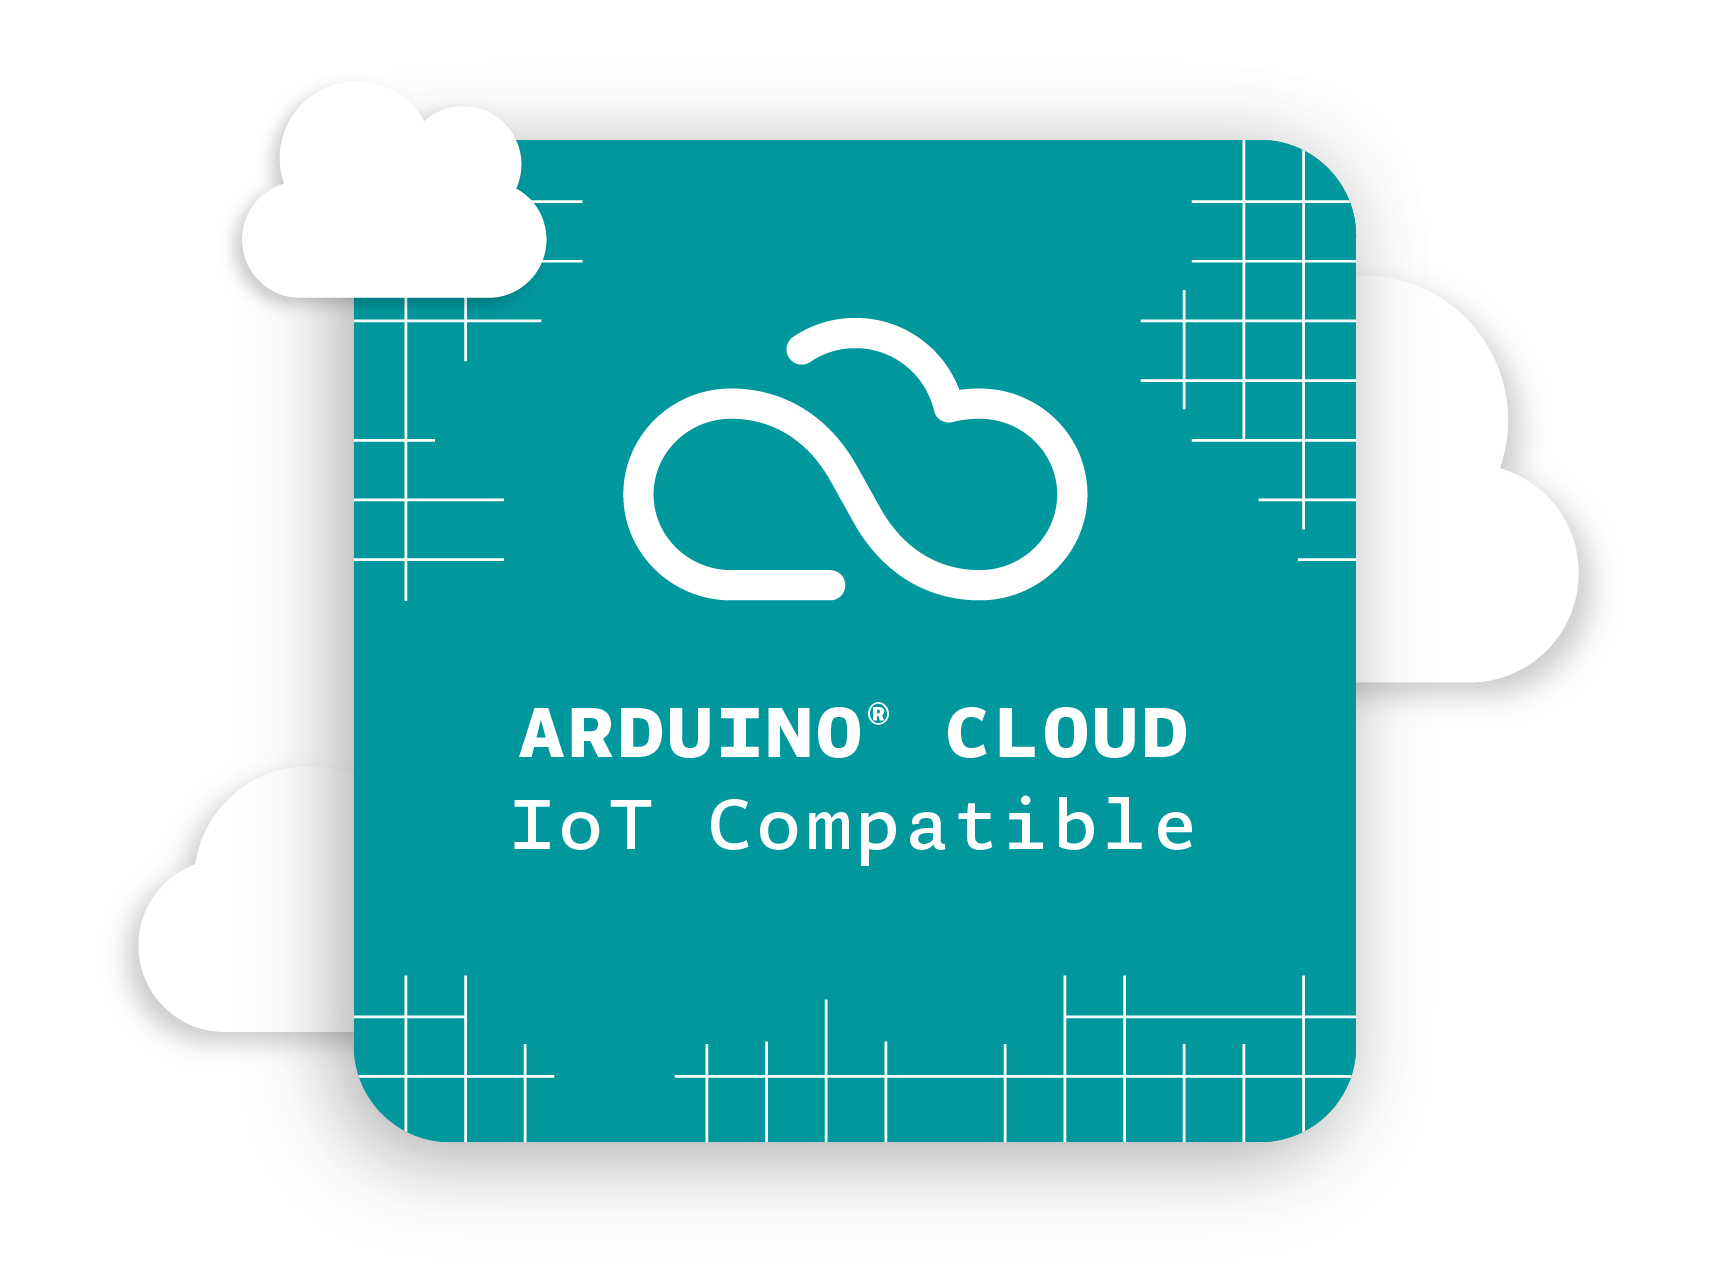 Arduino Nano 33 IoT with headers